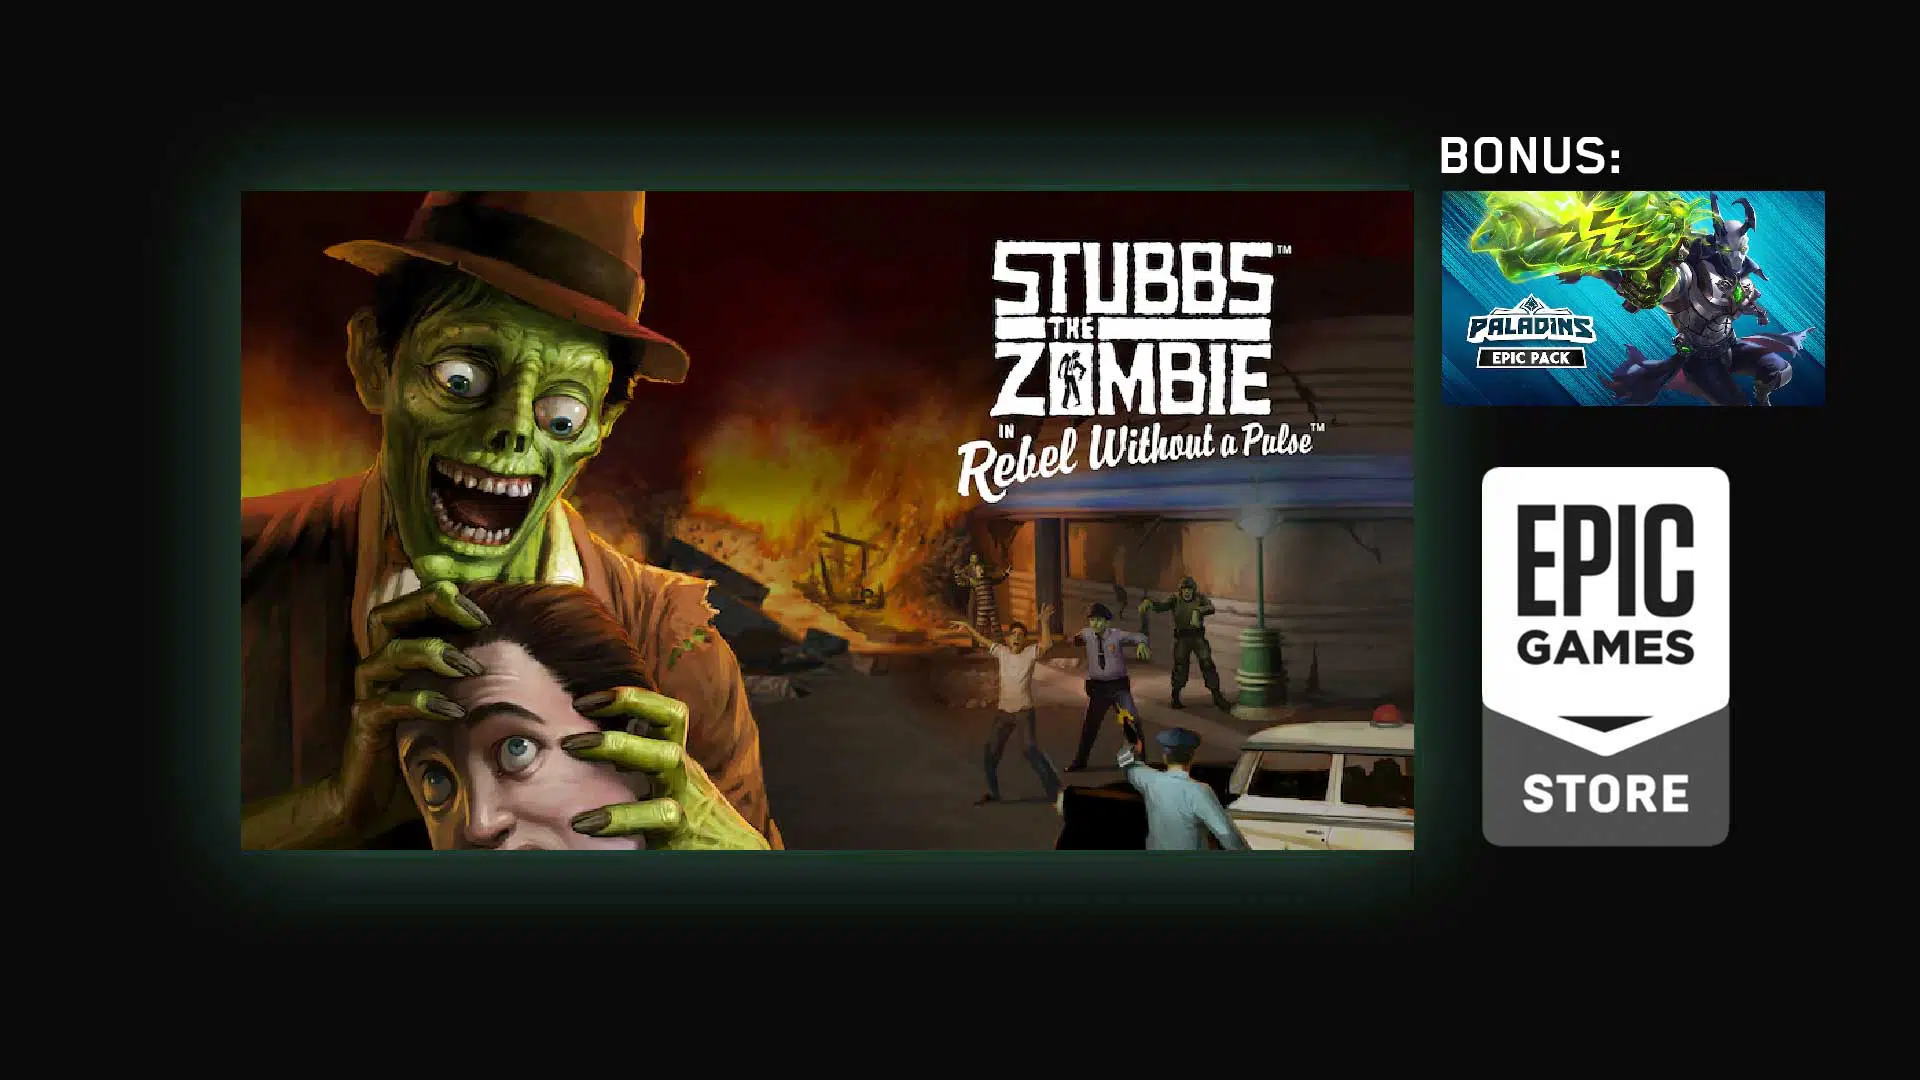 epic game free game 2021 stubbs the zombie